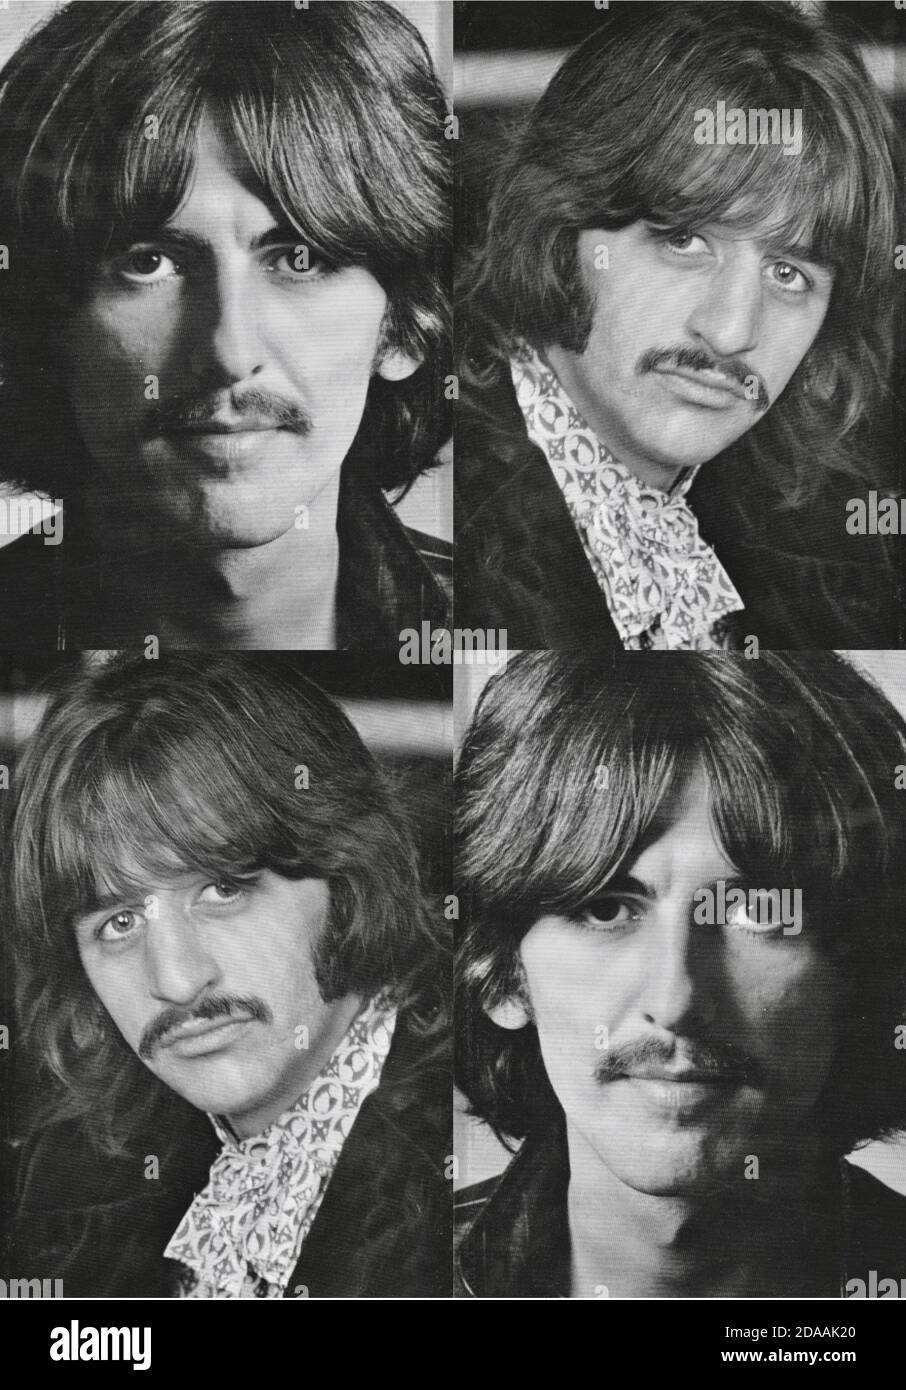 George harrison and Ringo Starr Stock Photo